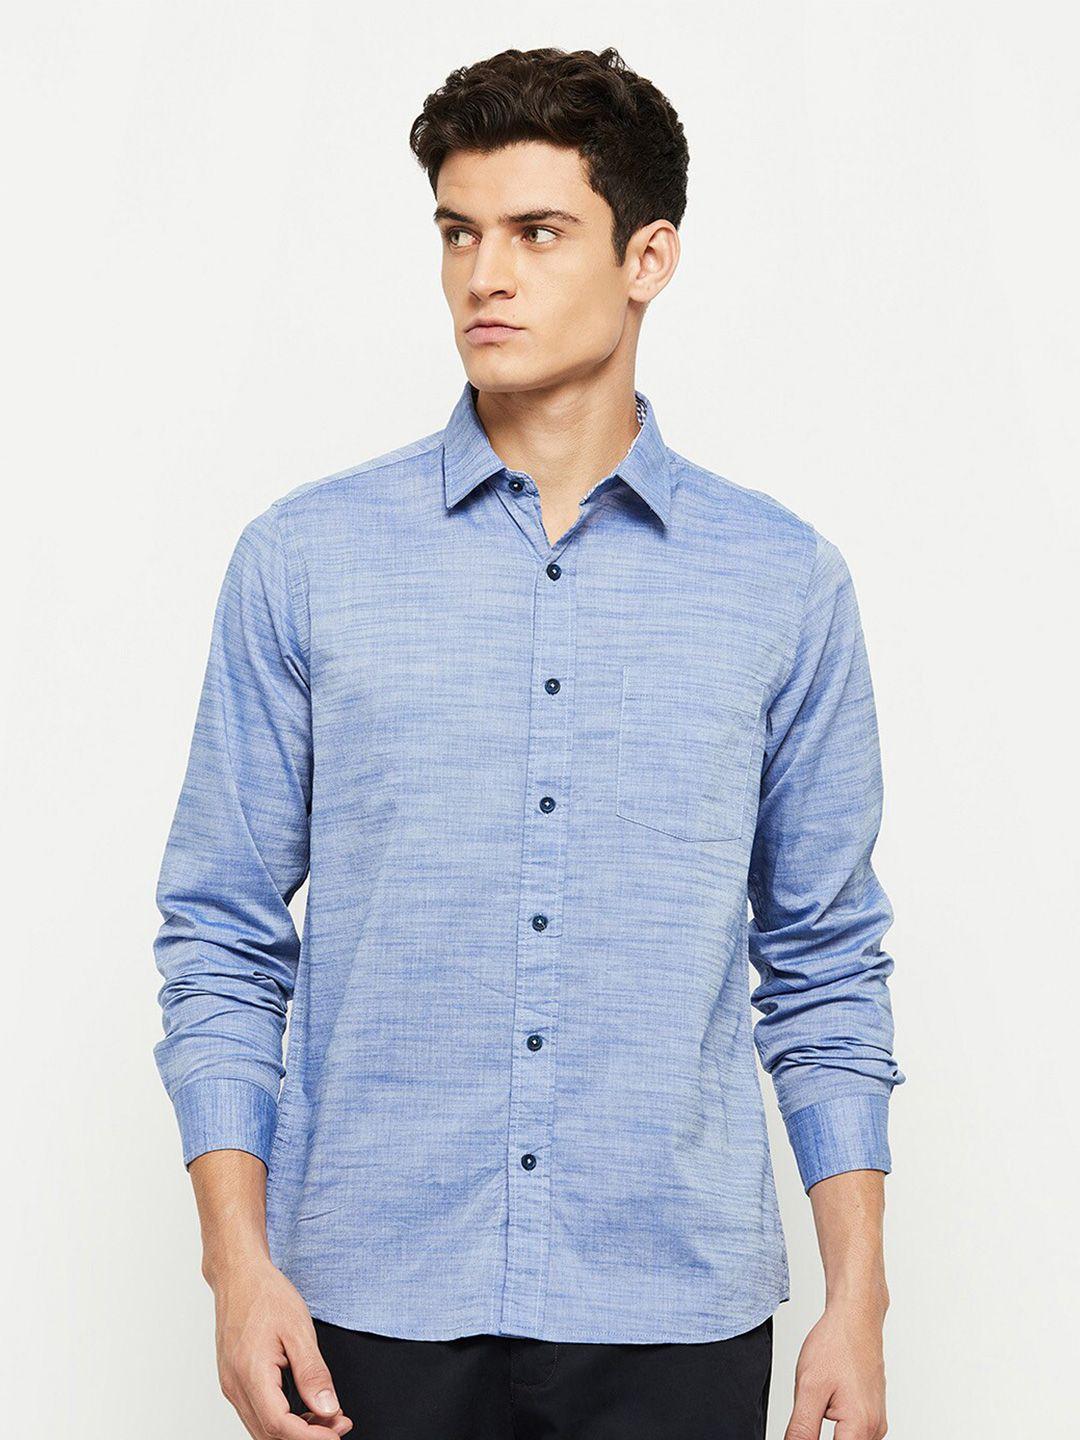 max men blue cotton casual shirt